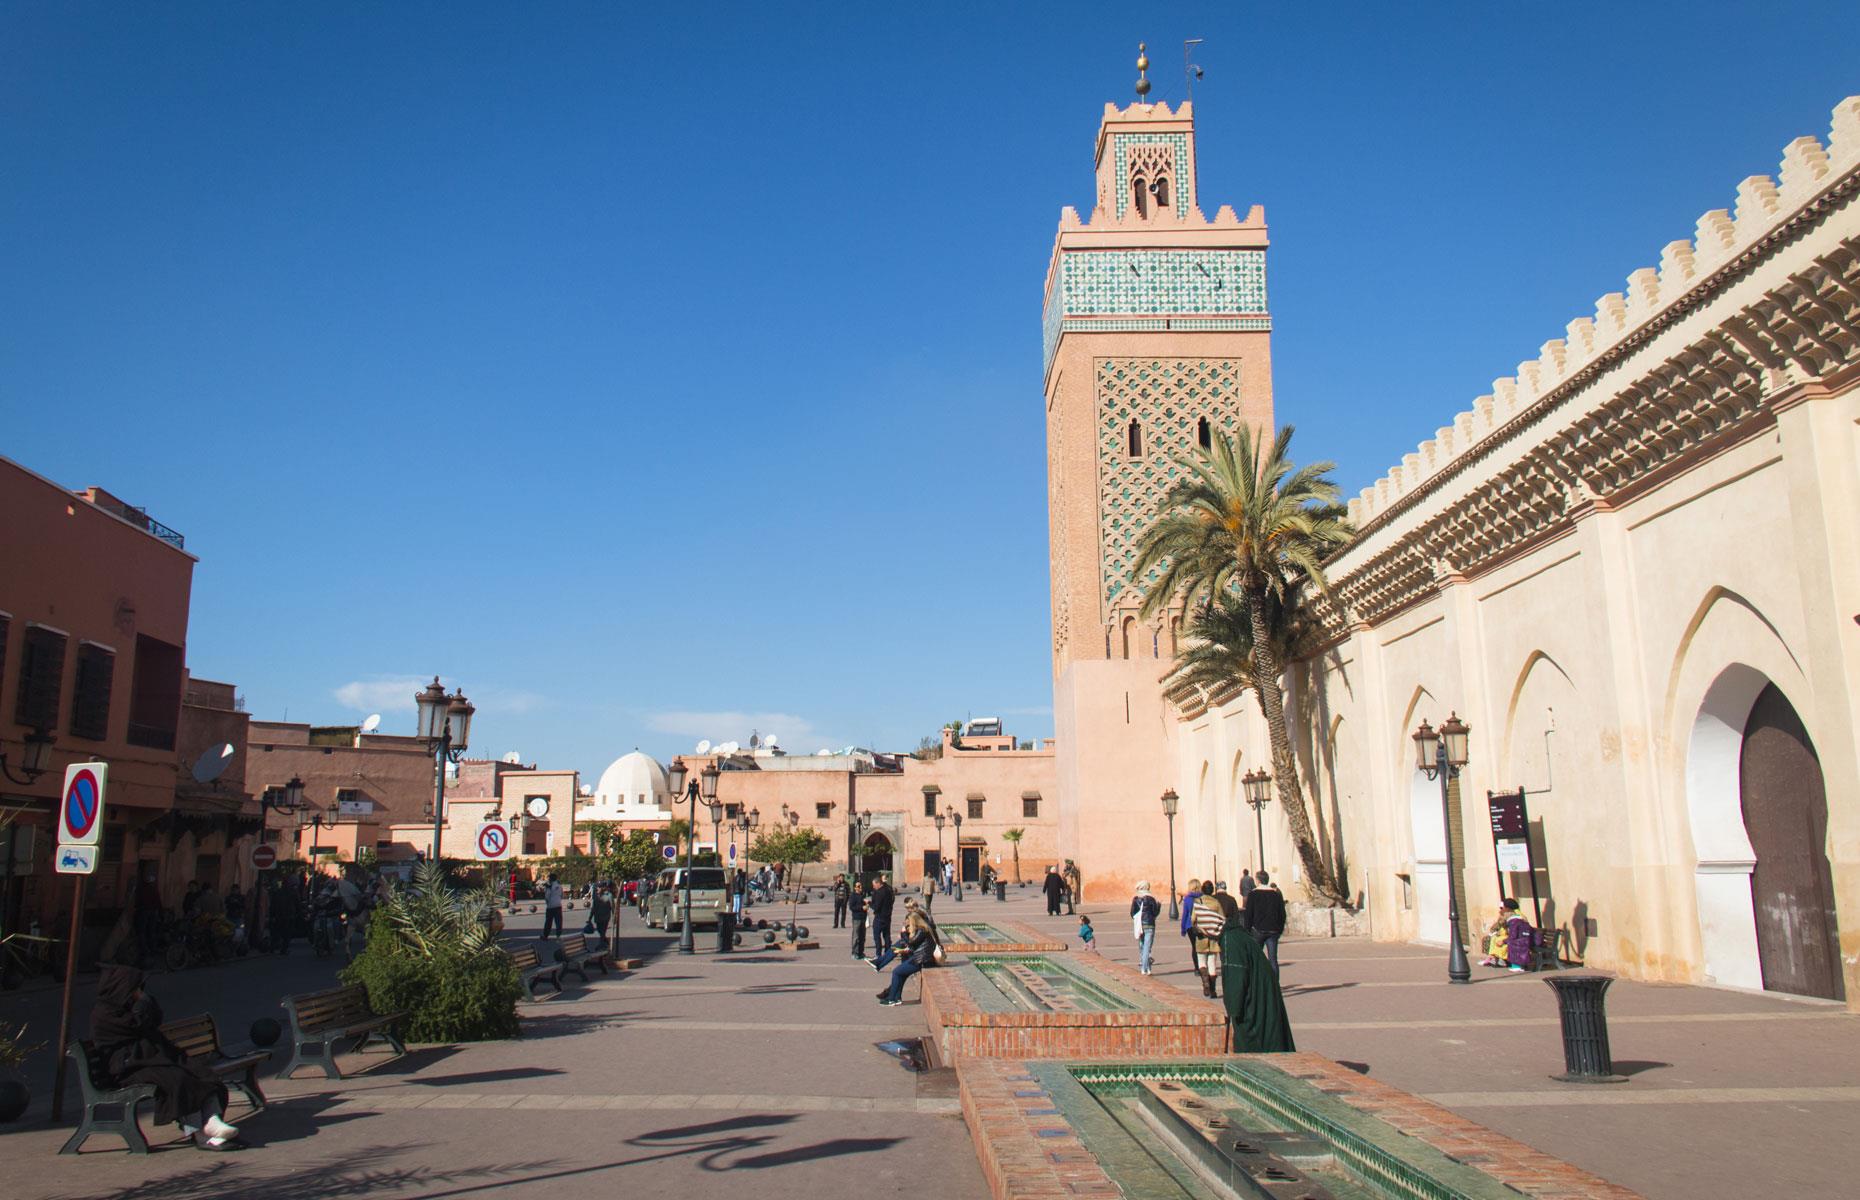 27 – Morocco